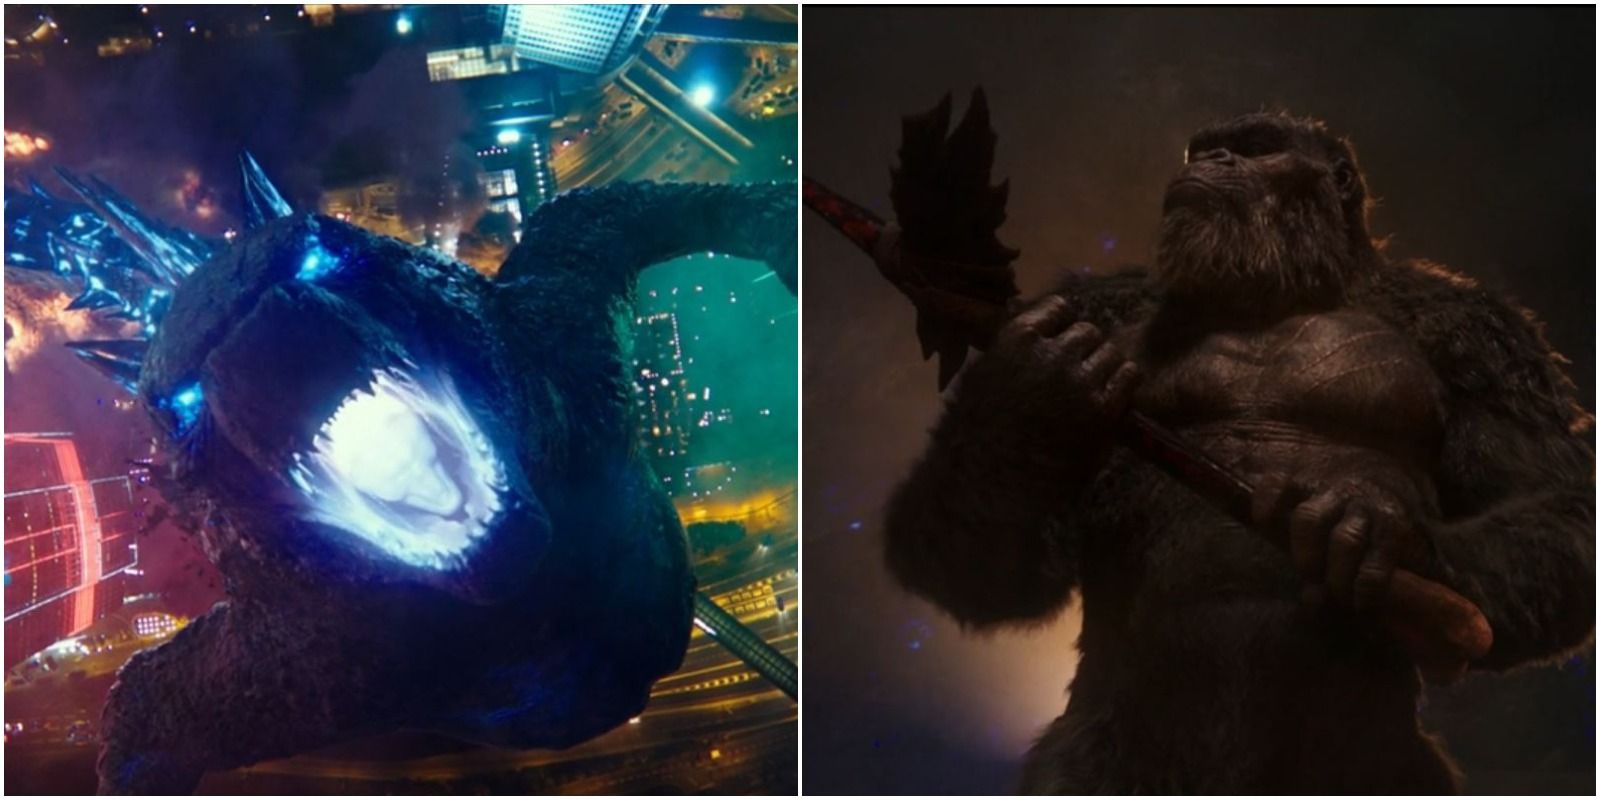 Shots of Godzilla and Kong from Godzilla vs. Kong